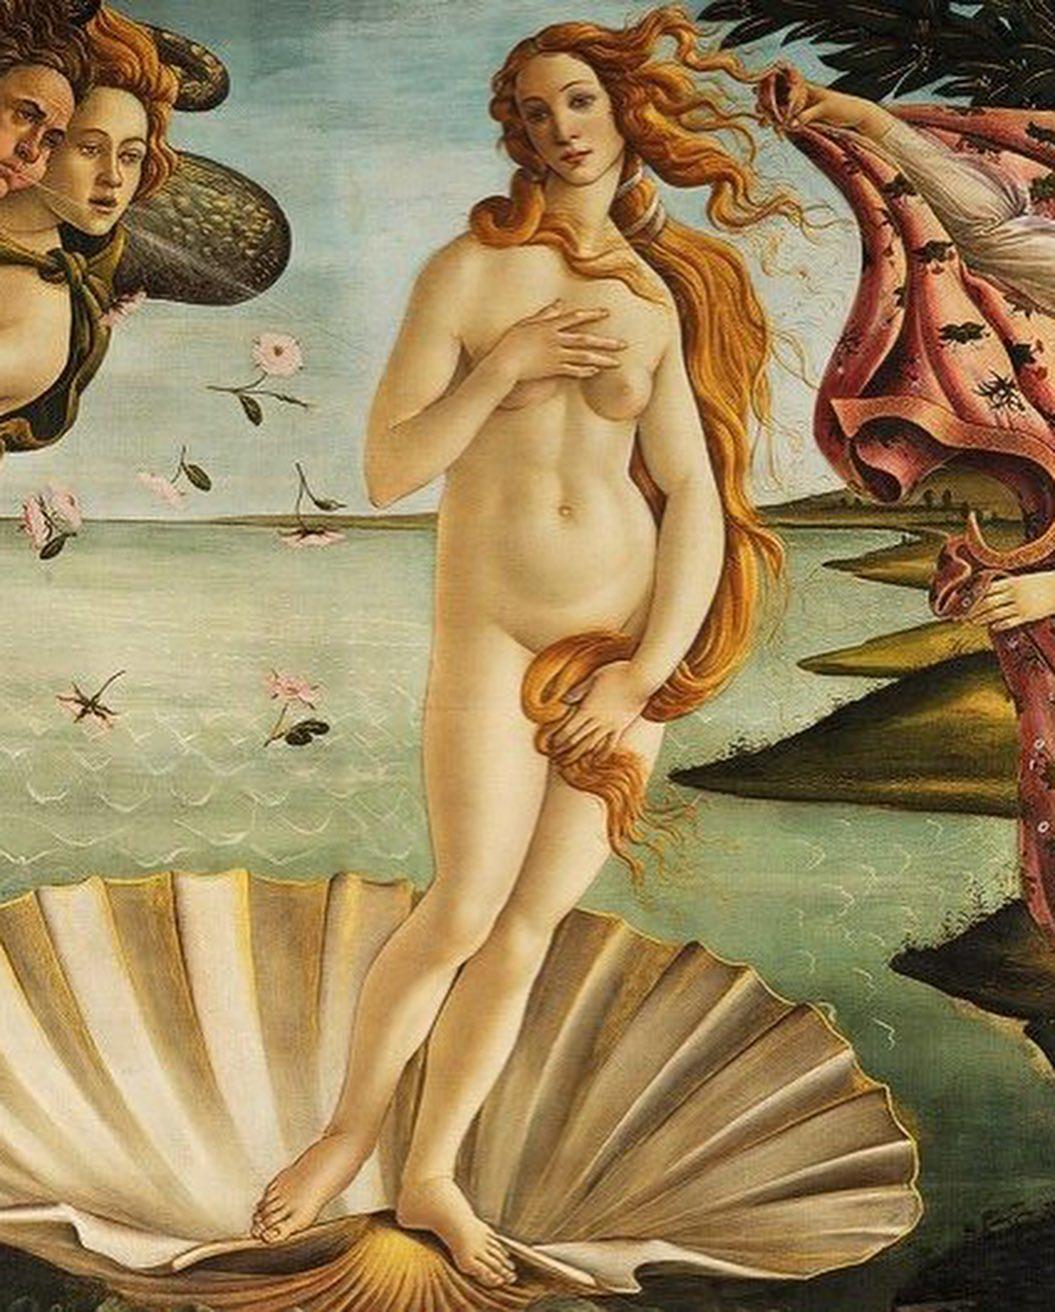  "The Birth of Venus" painting